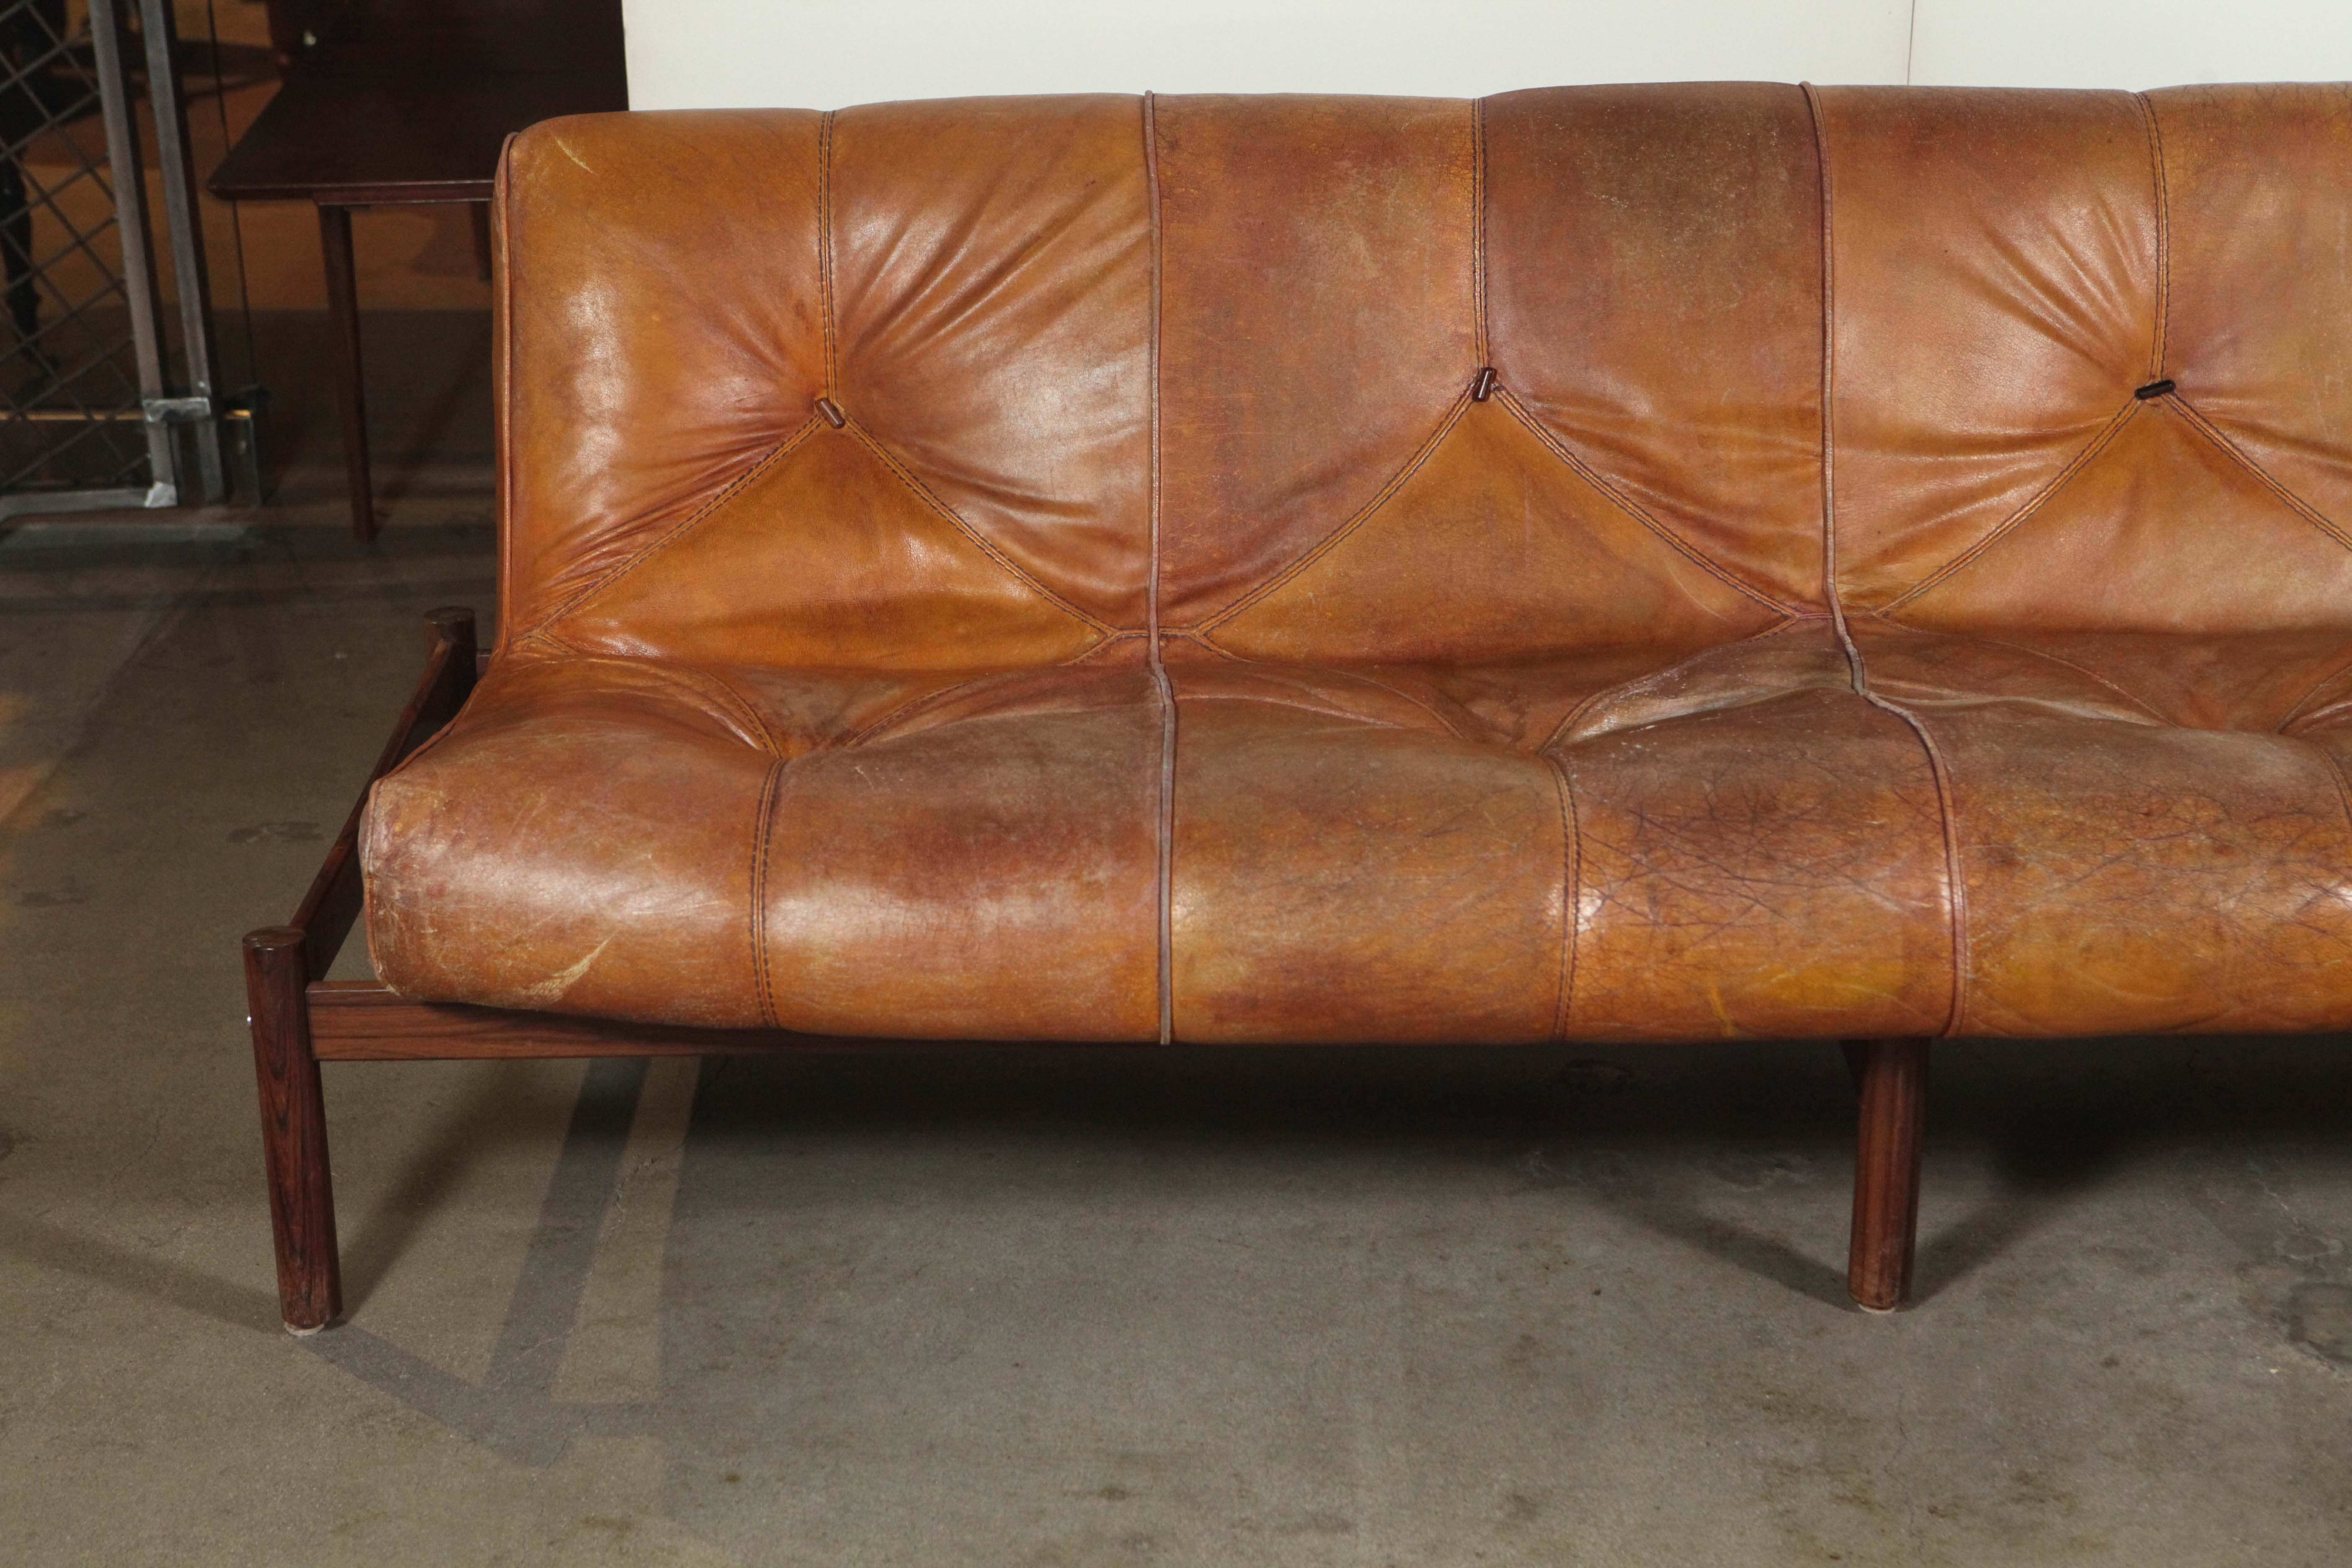 Brown leather single tufted Danish sofa on wood base.